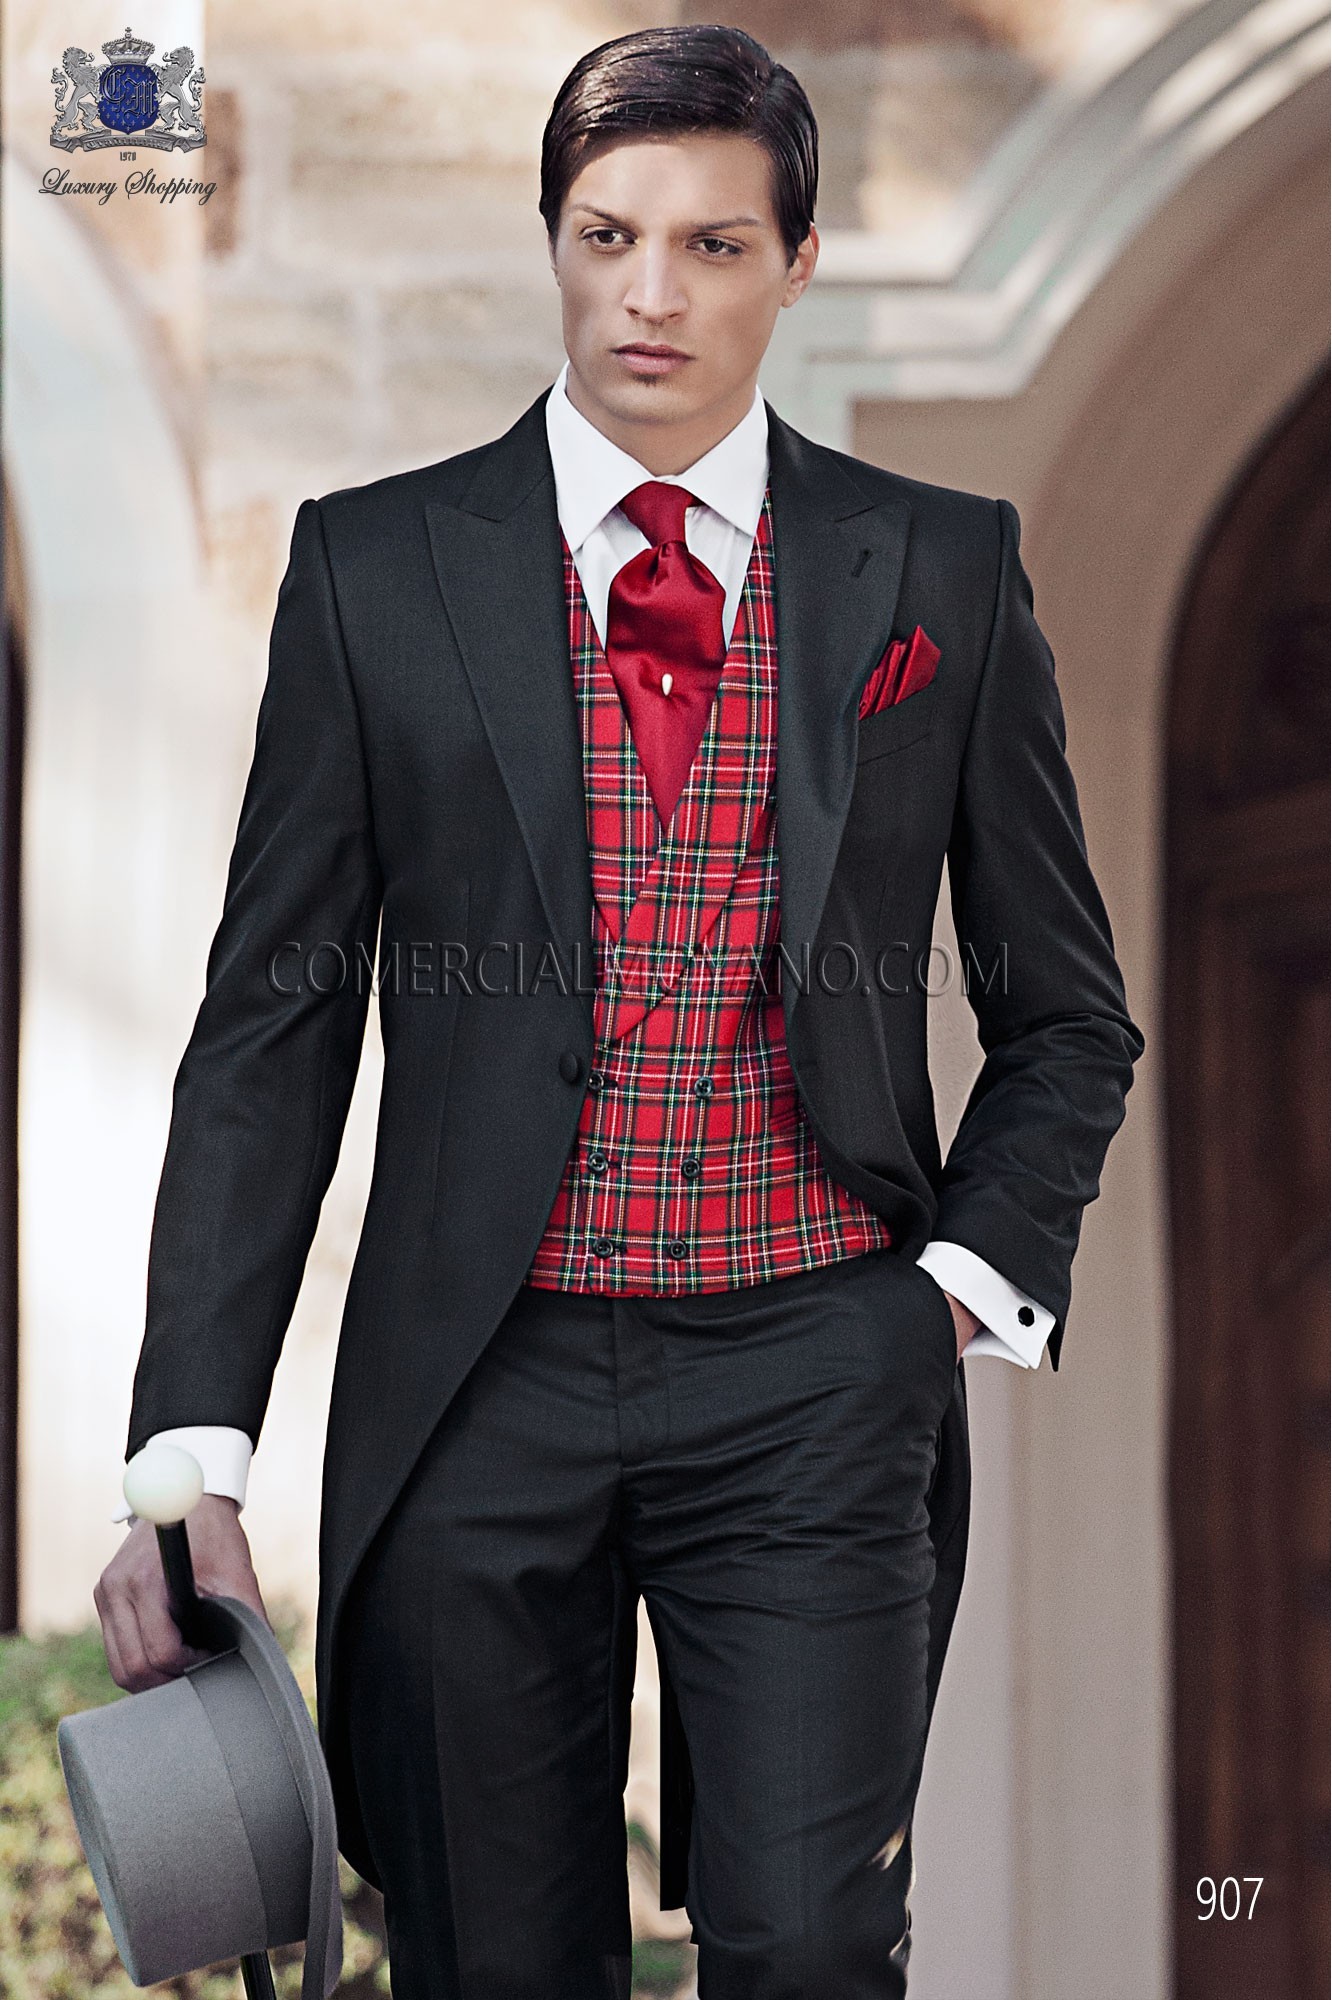 Gentleman black men wedding suit model 907 Mario Moyano